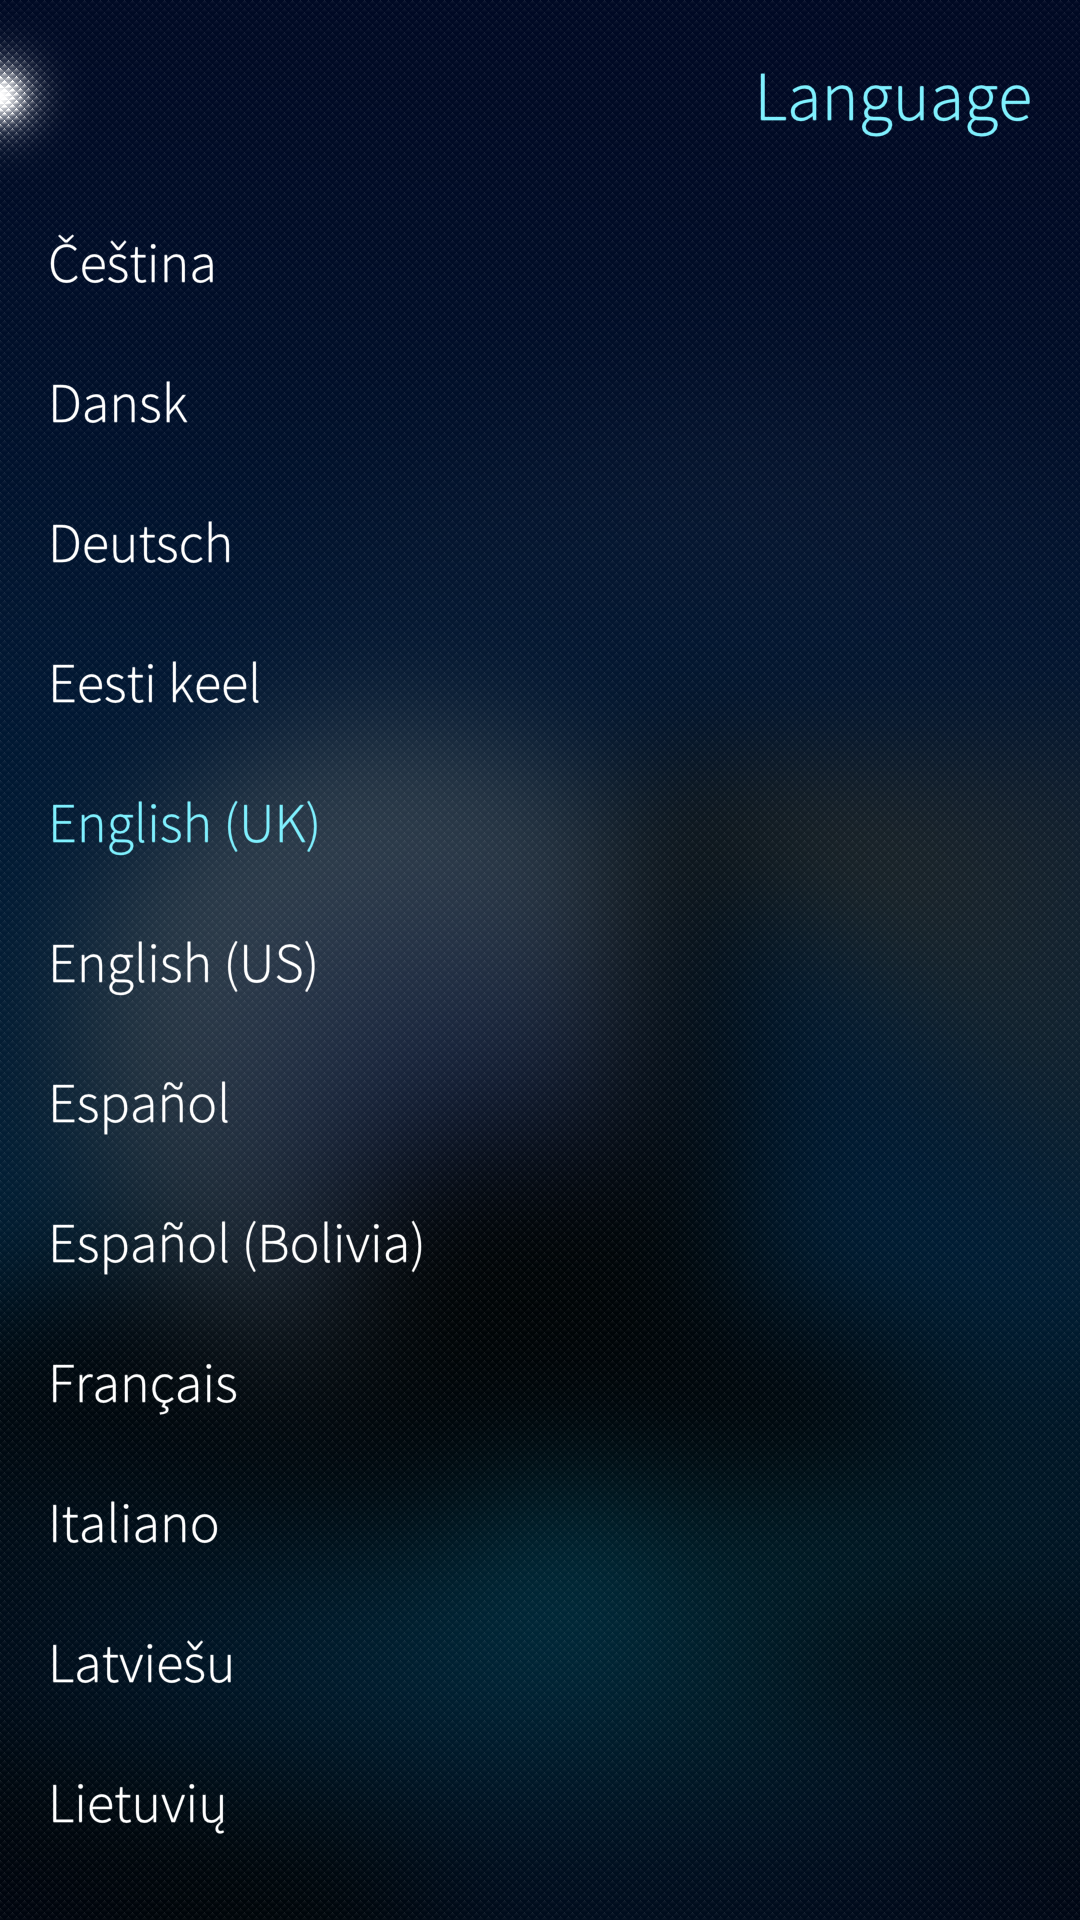 List of languages (English)